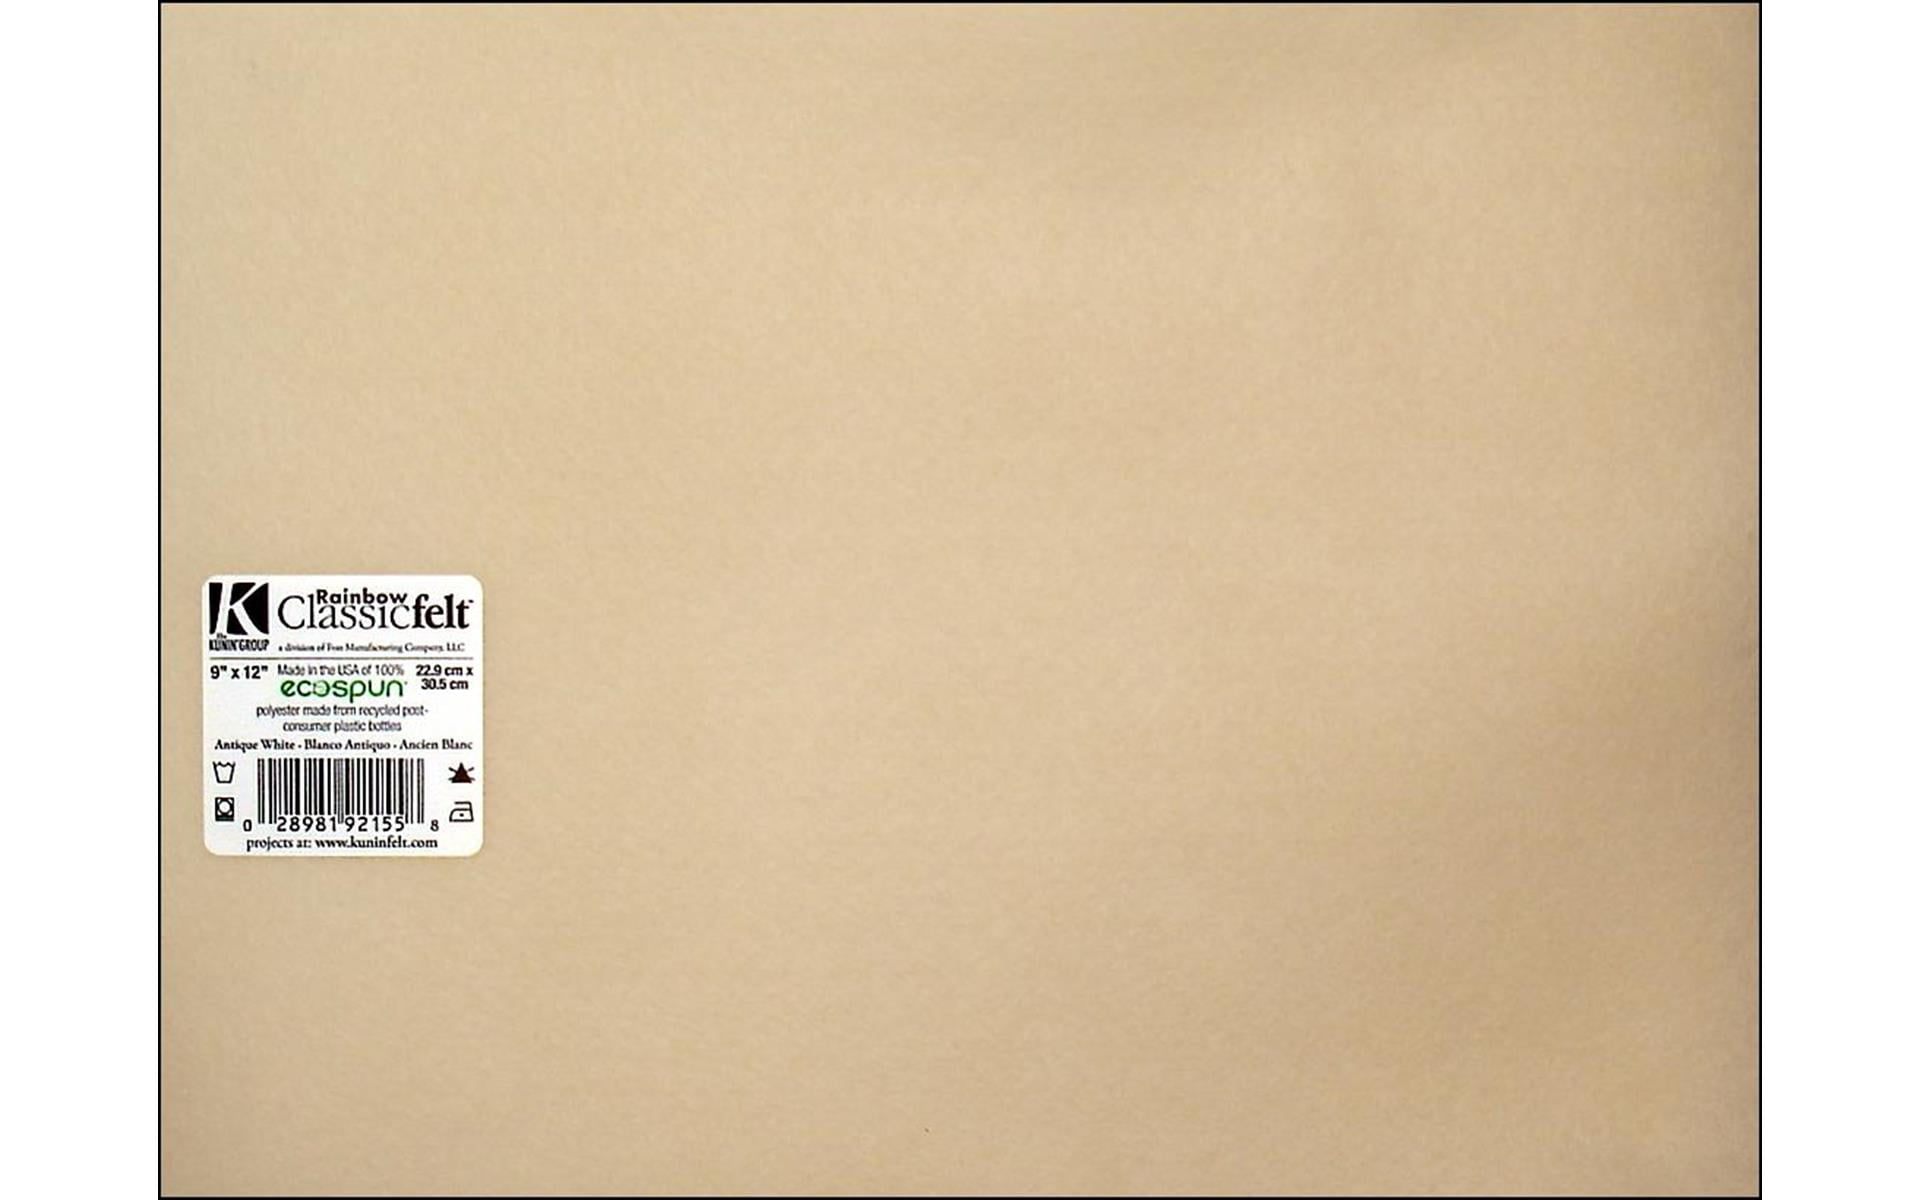 1/4 Adhesive Felt Sheet (6 x 12) White Felt – Mass General Brigham Foot  & Ankle Store